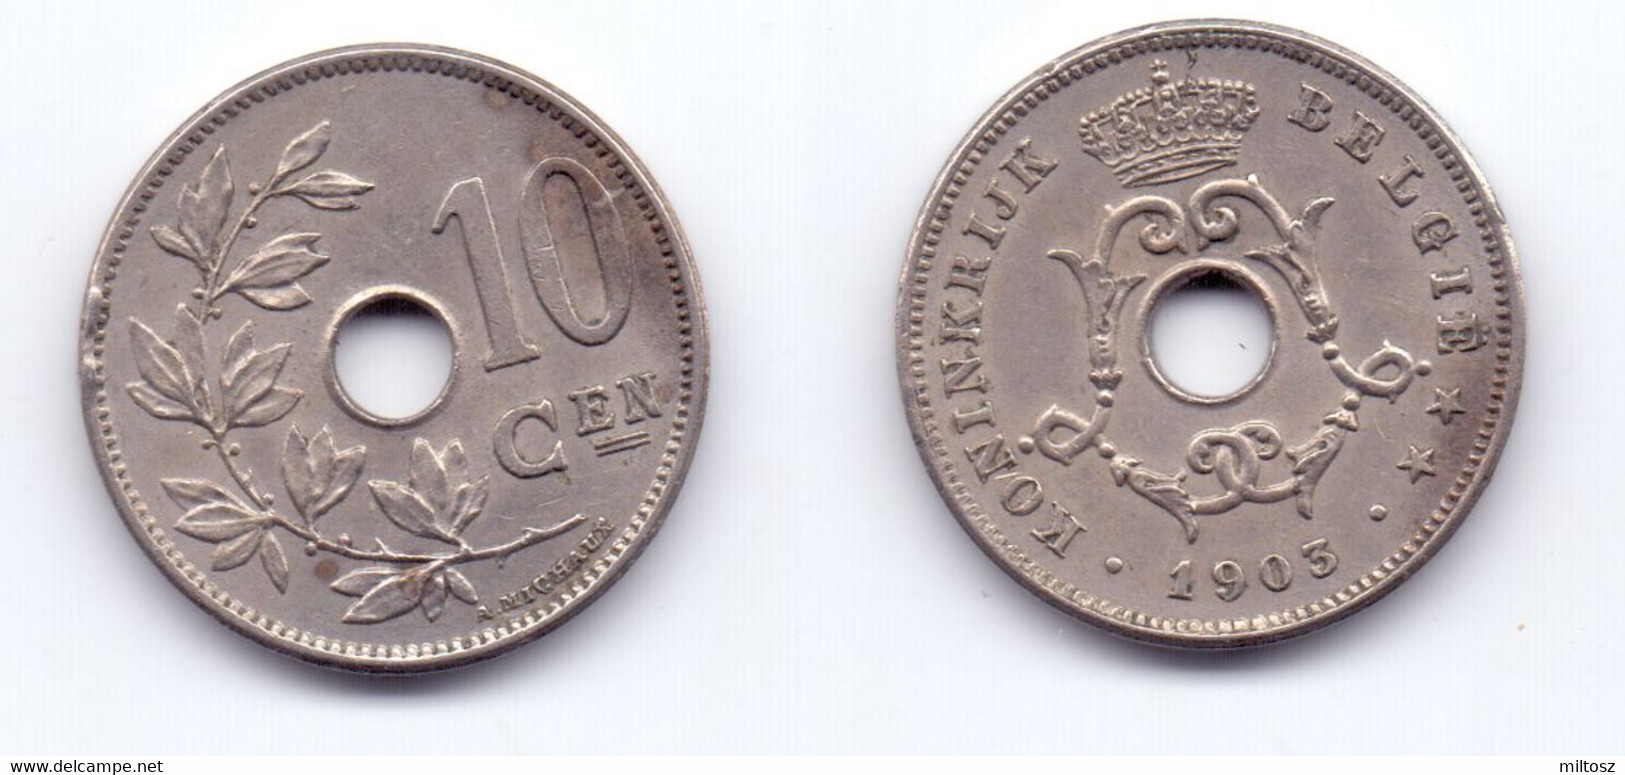 Belgium 10 Centimes 1903 (legend In Dutch) - 10 Cents